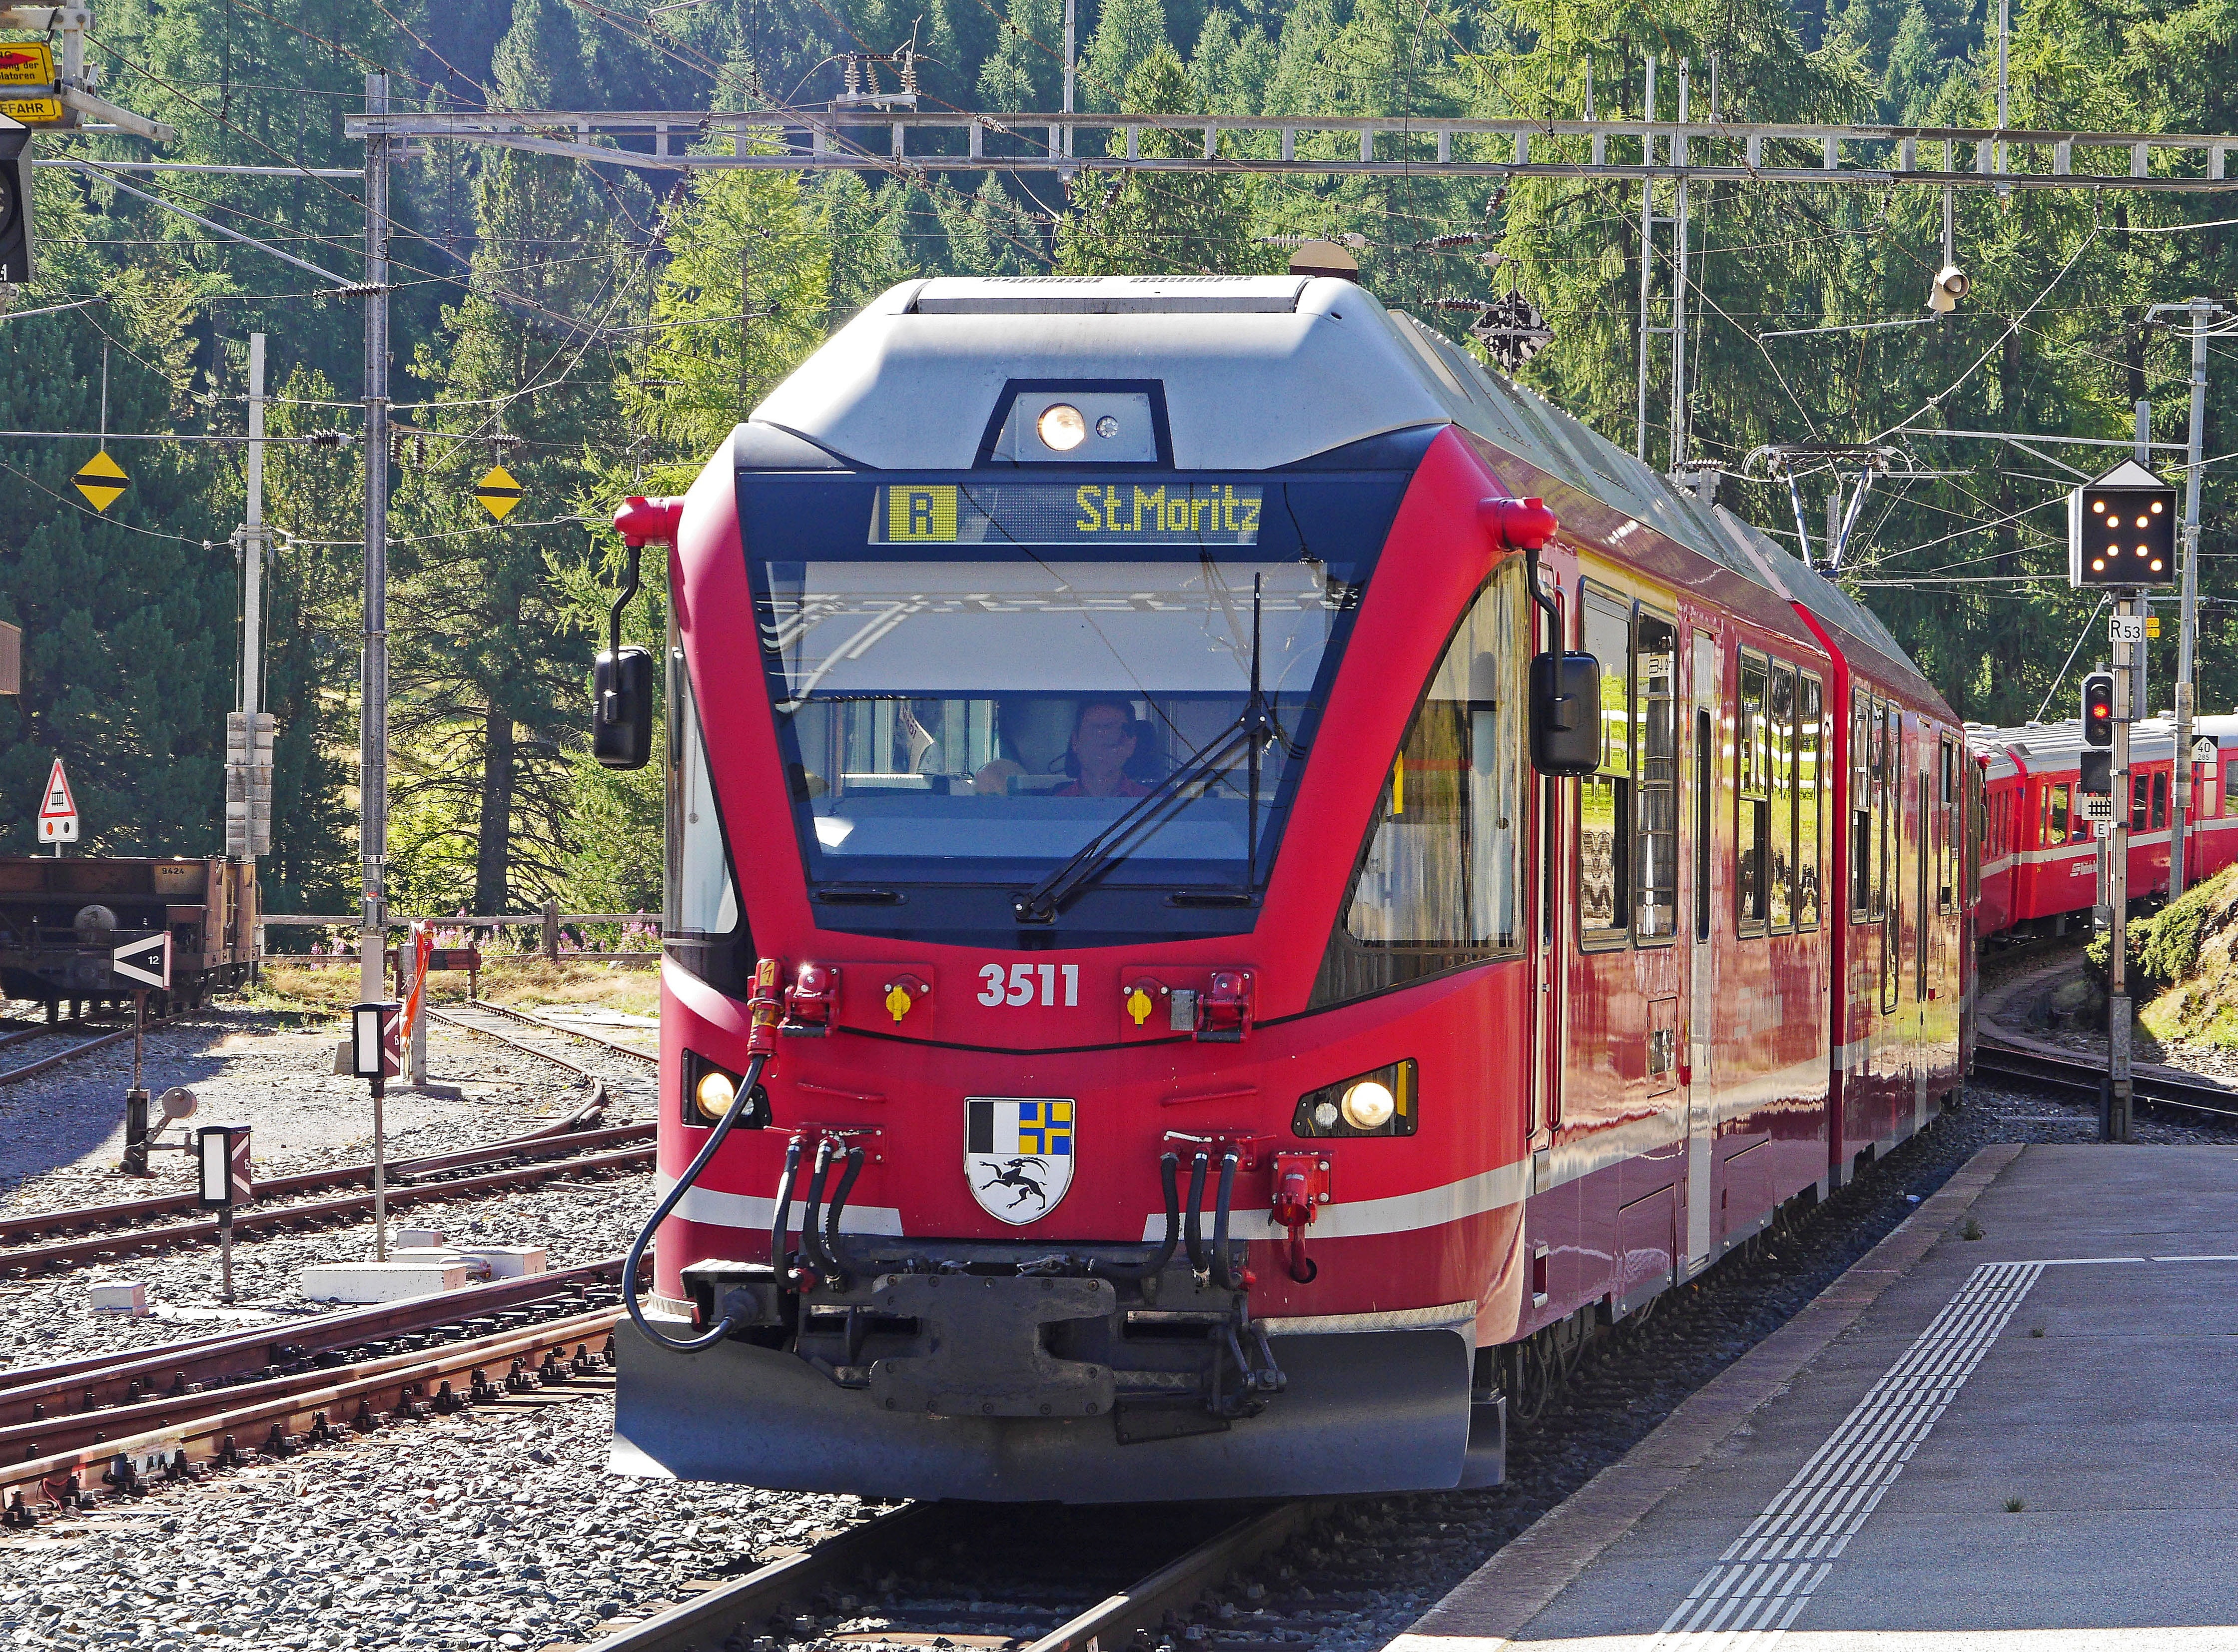 red and gray train, bernina railway, pontresina, railway station